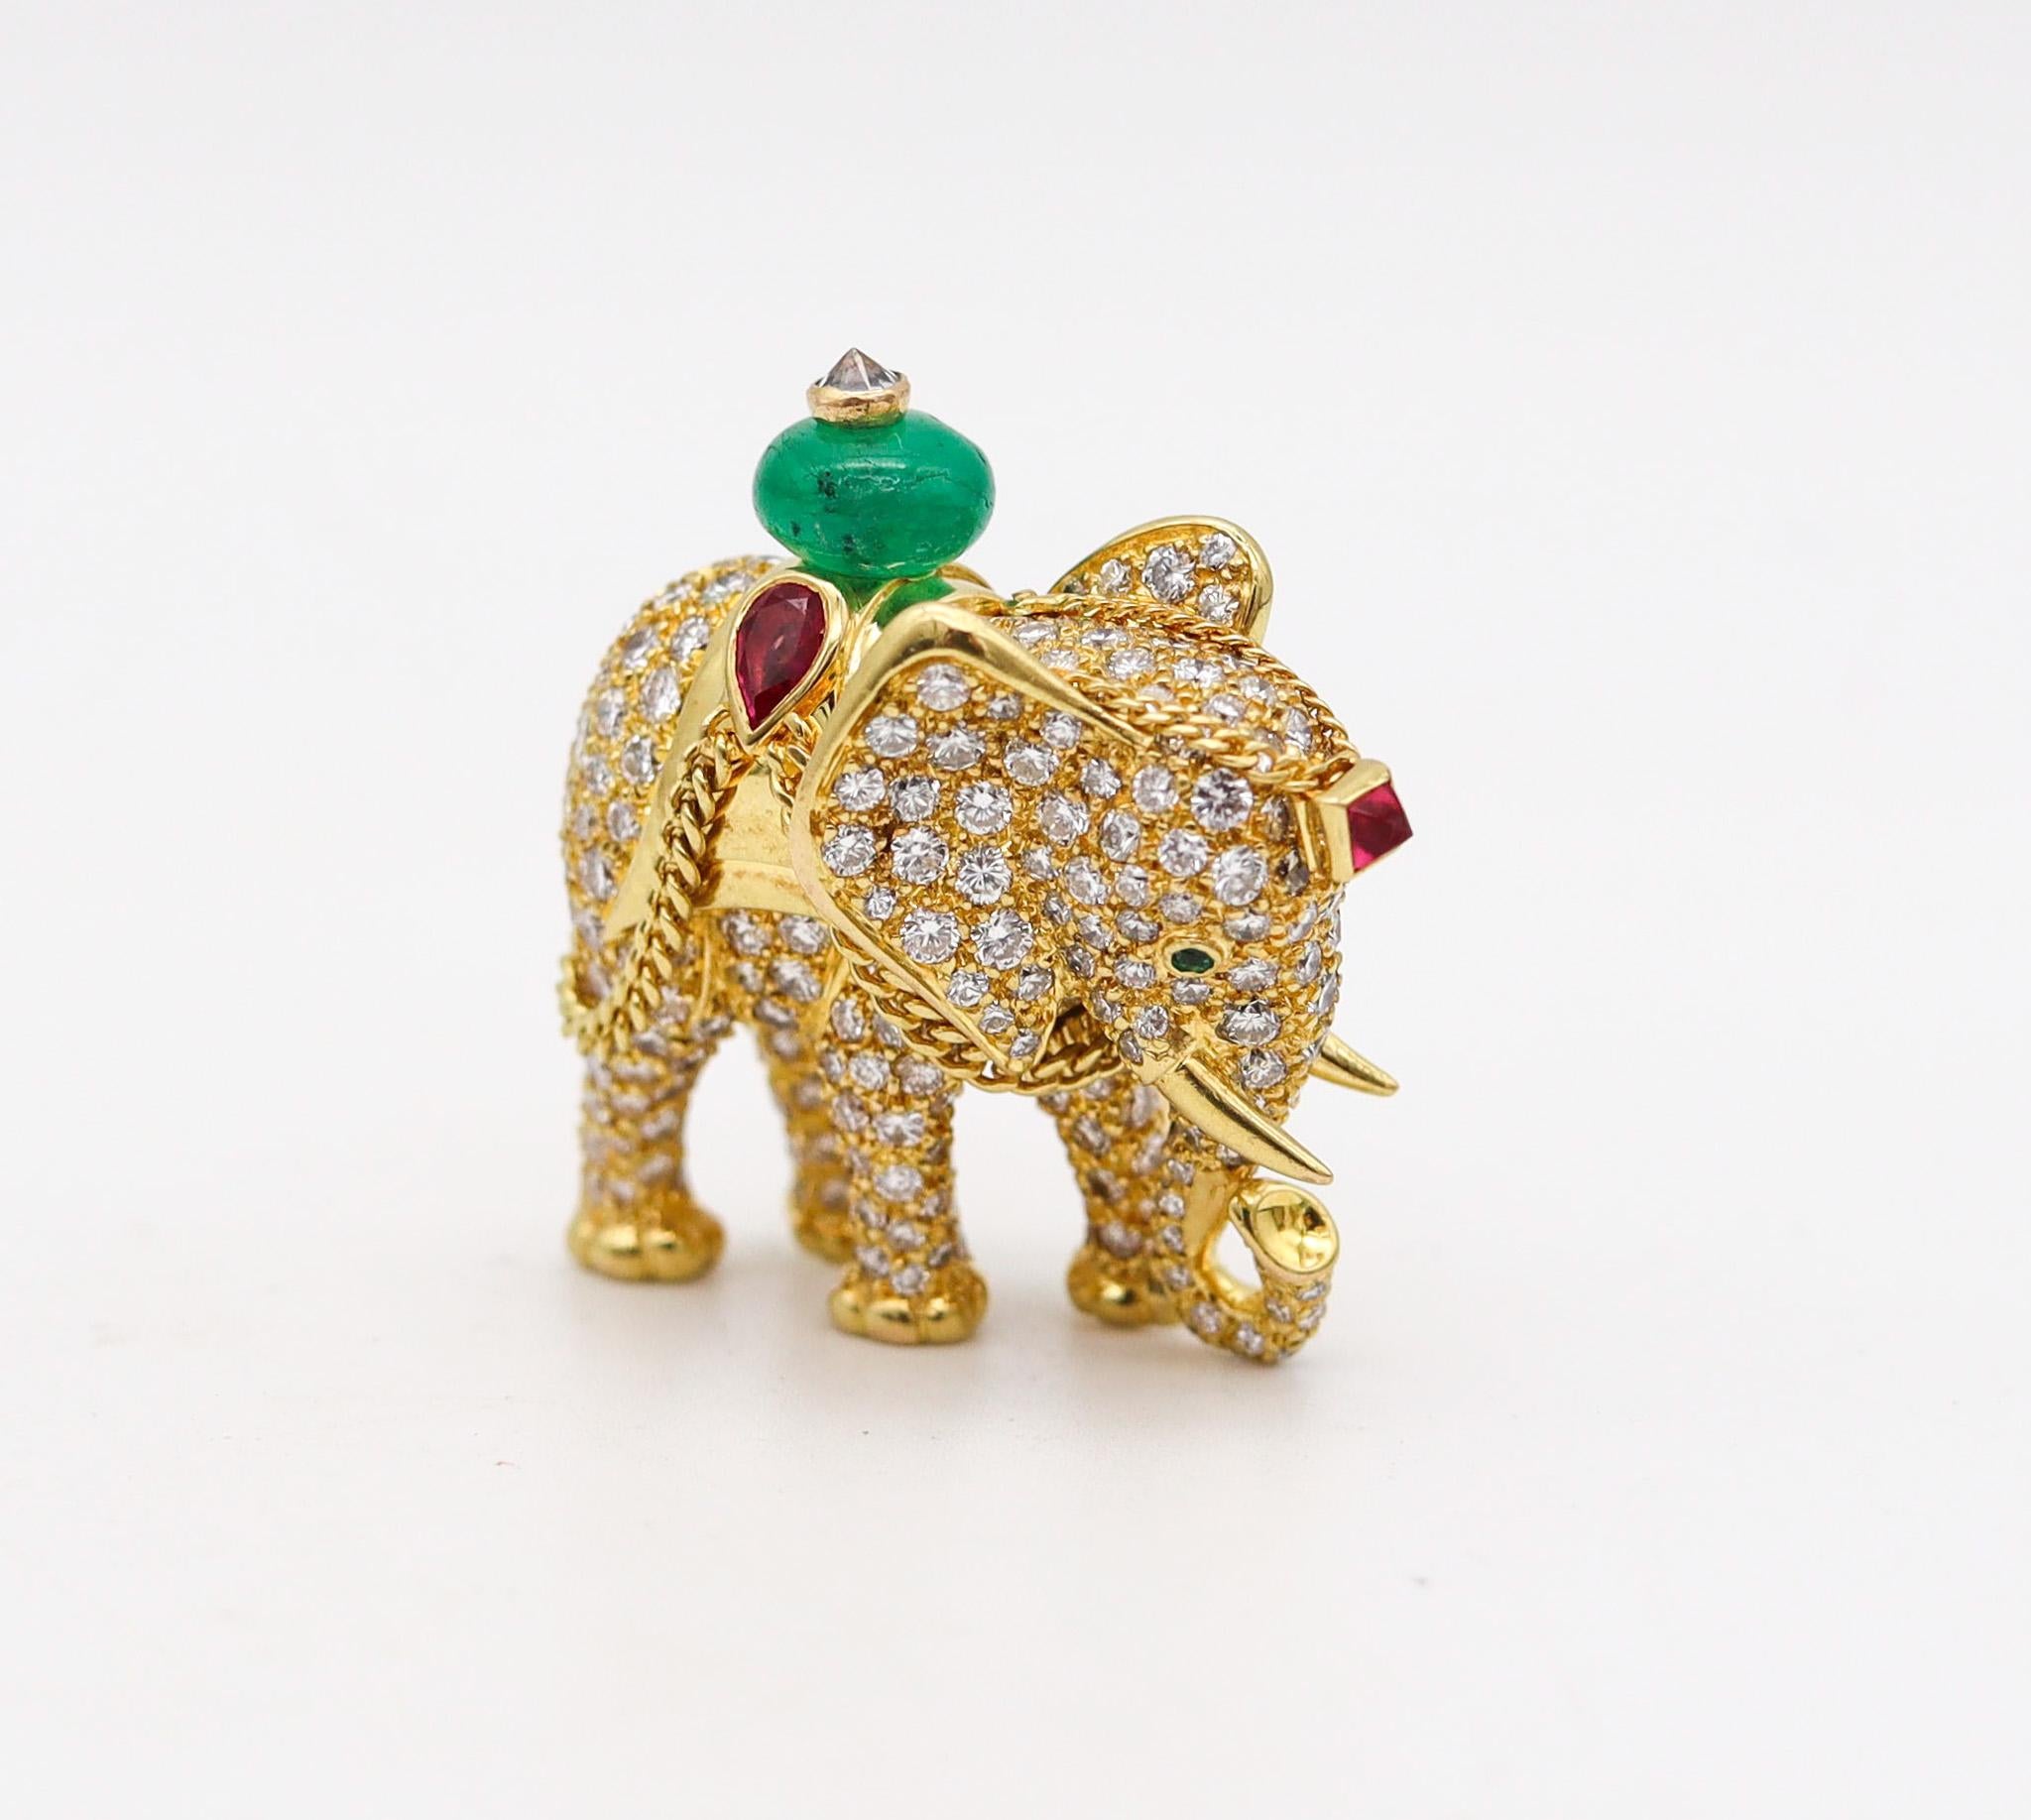 Cartier Paris Elephant Brooch 18Kt Gold With 5.24 Ctw Diamonds Emeralds & Rubies For Sale 1